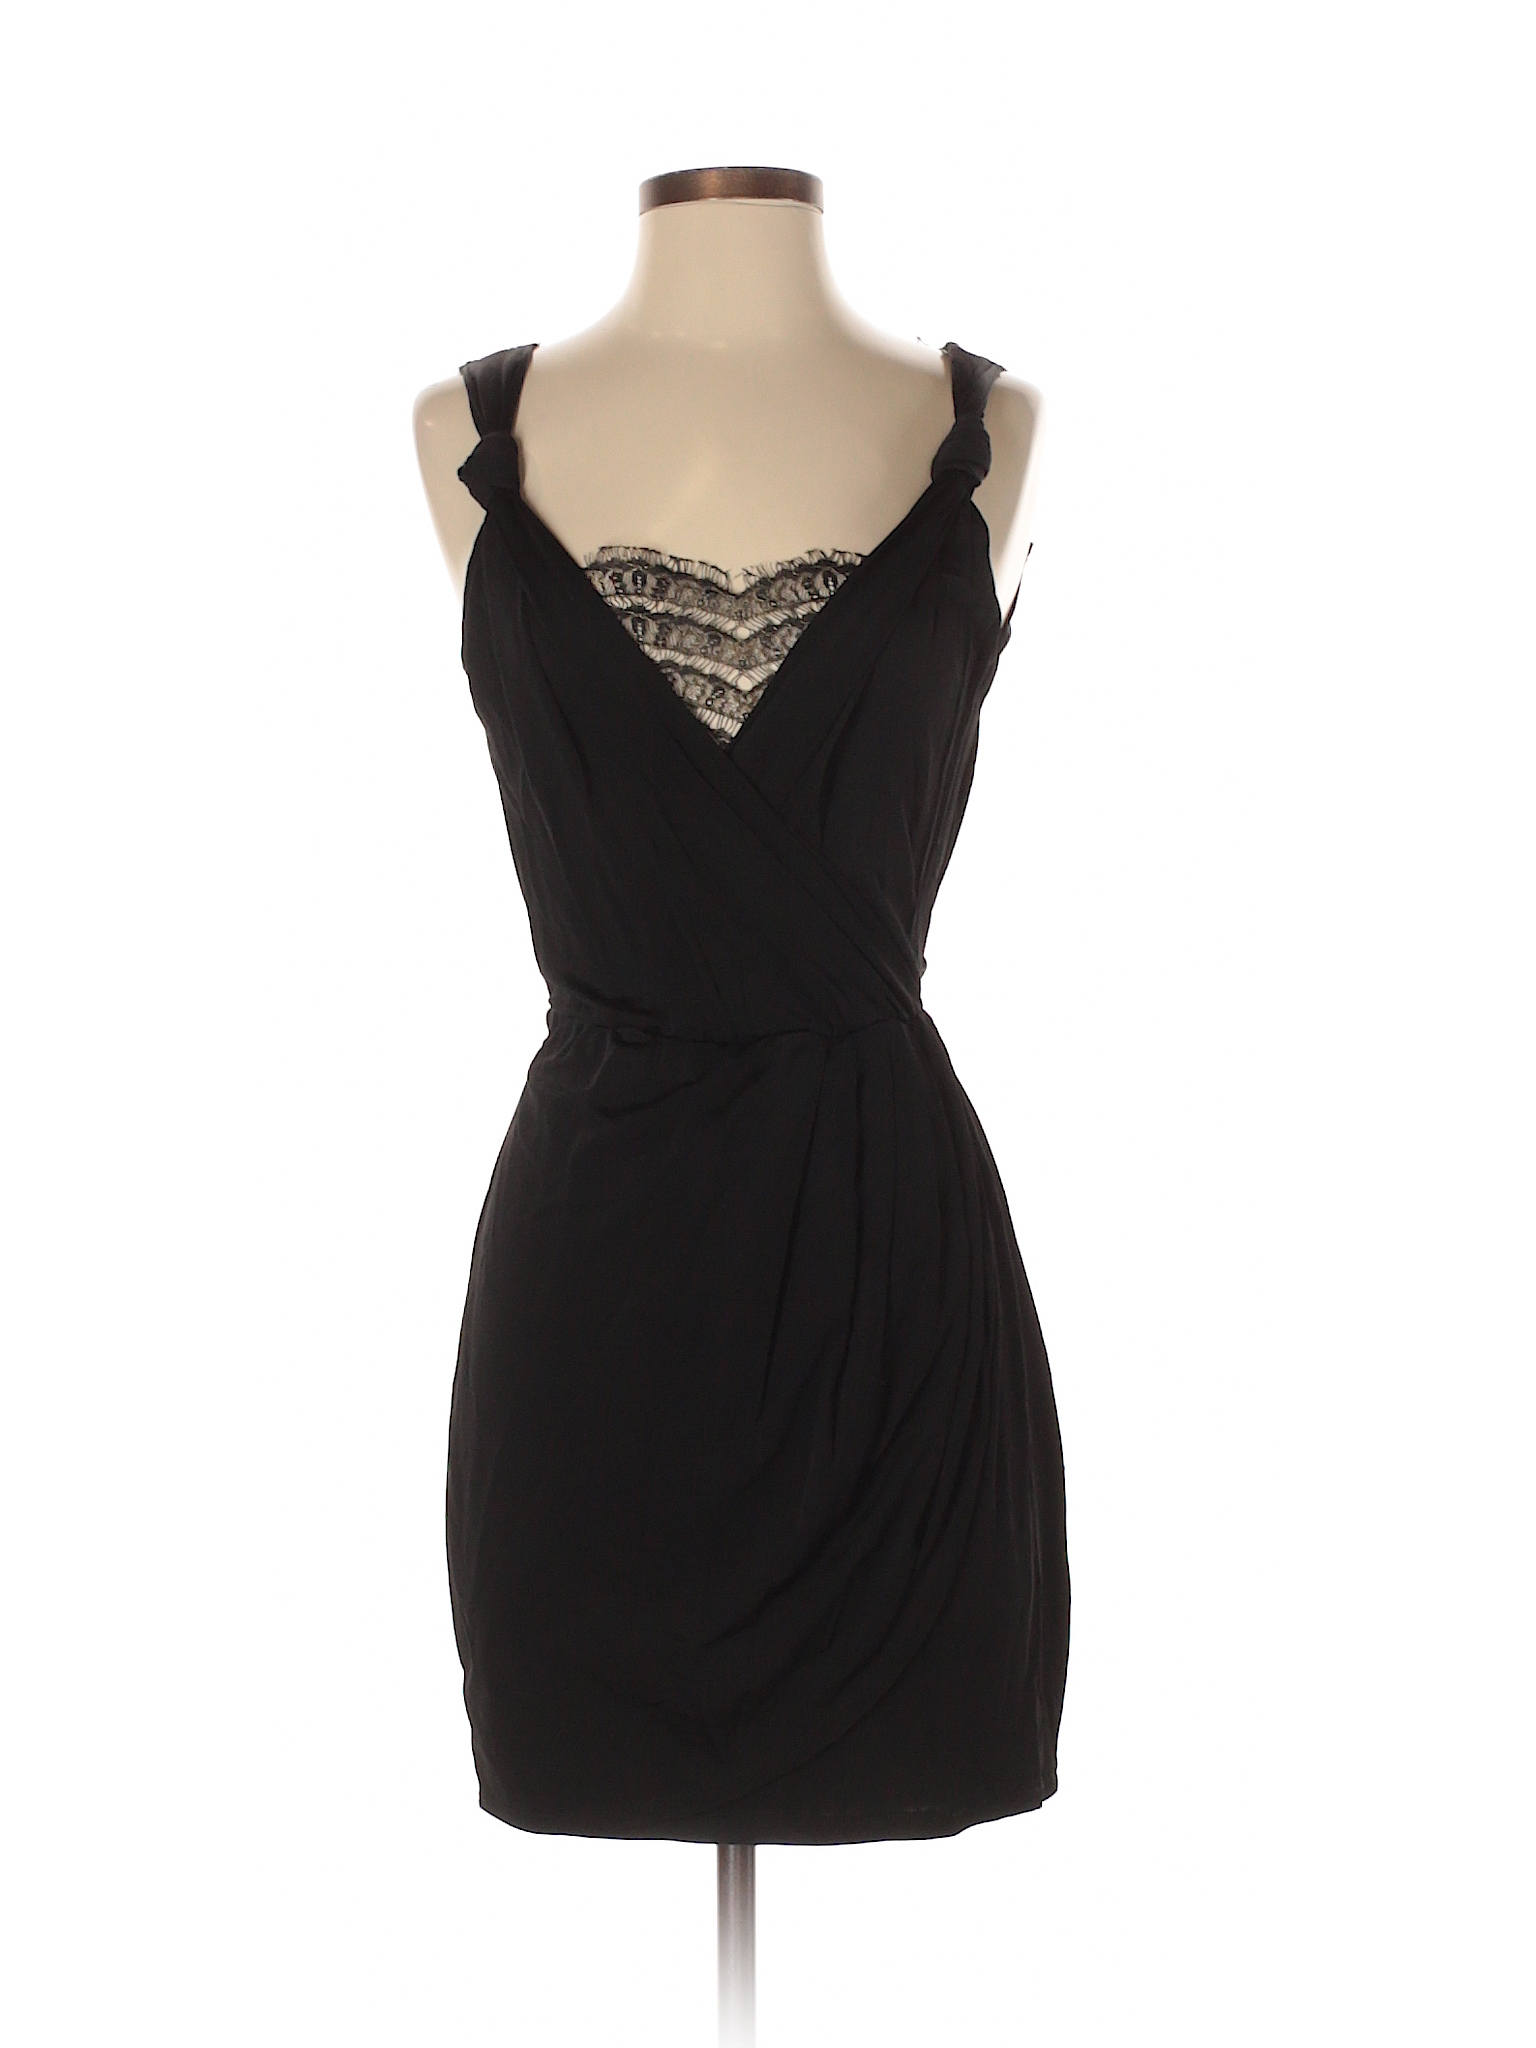 RACHEL Rachel Roy 100% Rayon Lace Black Cocktail Dress Size XS - 80% ...